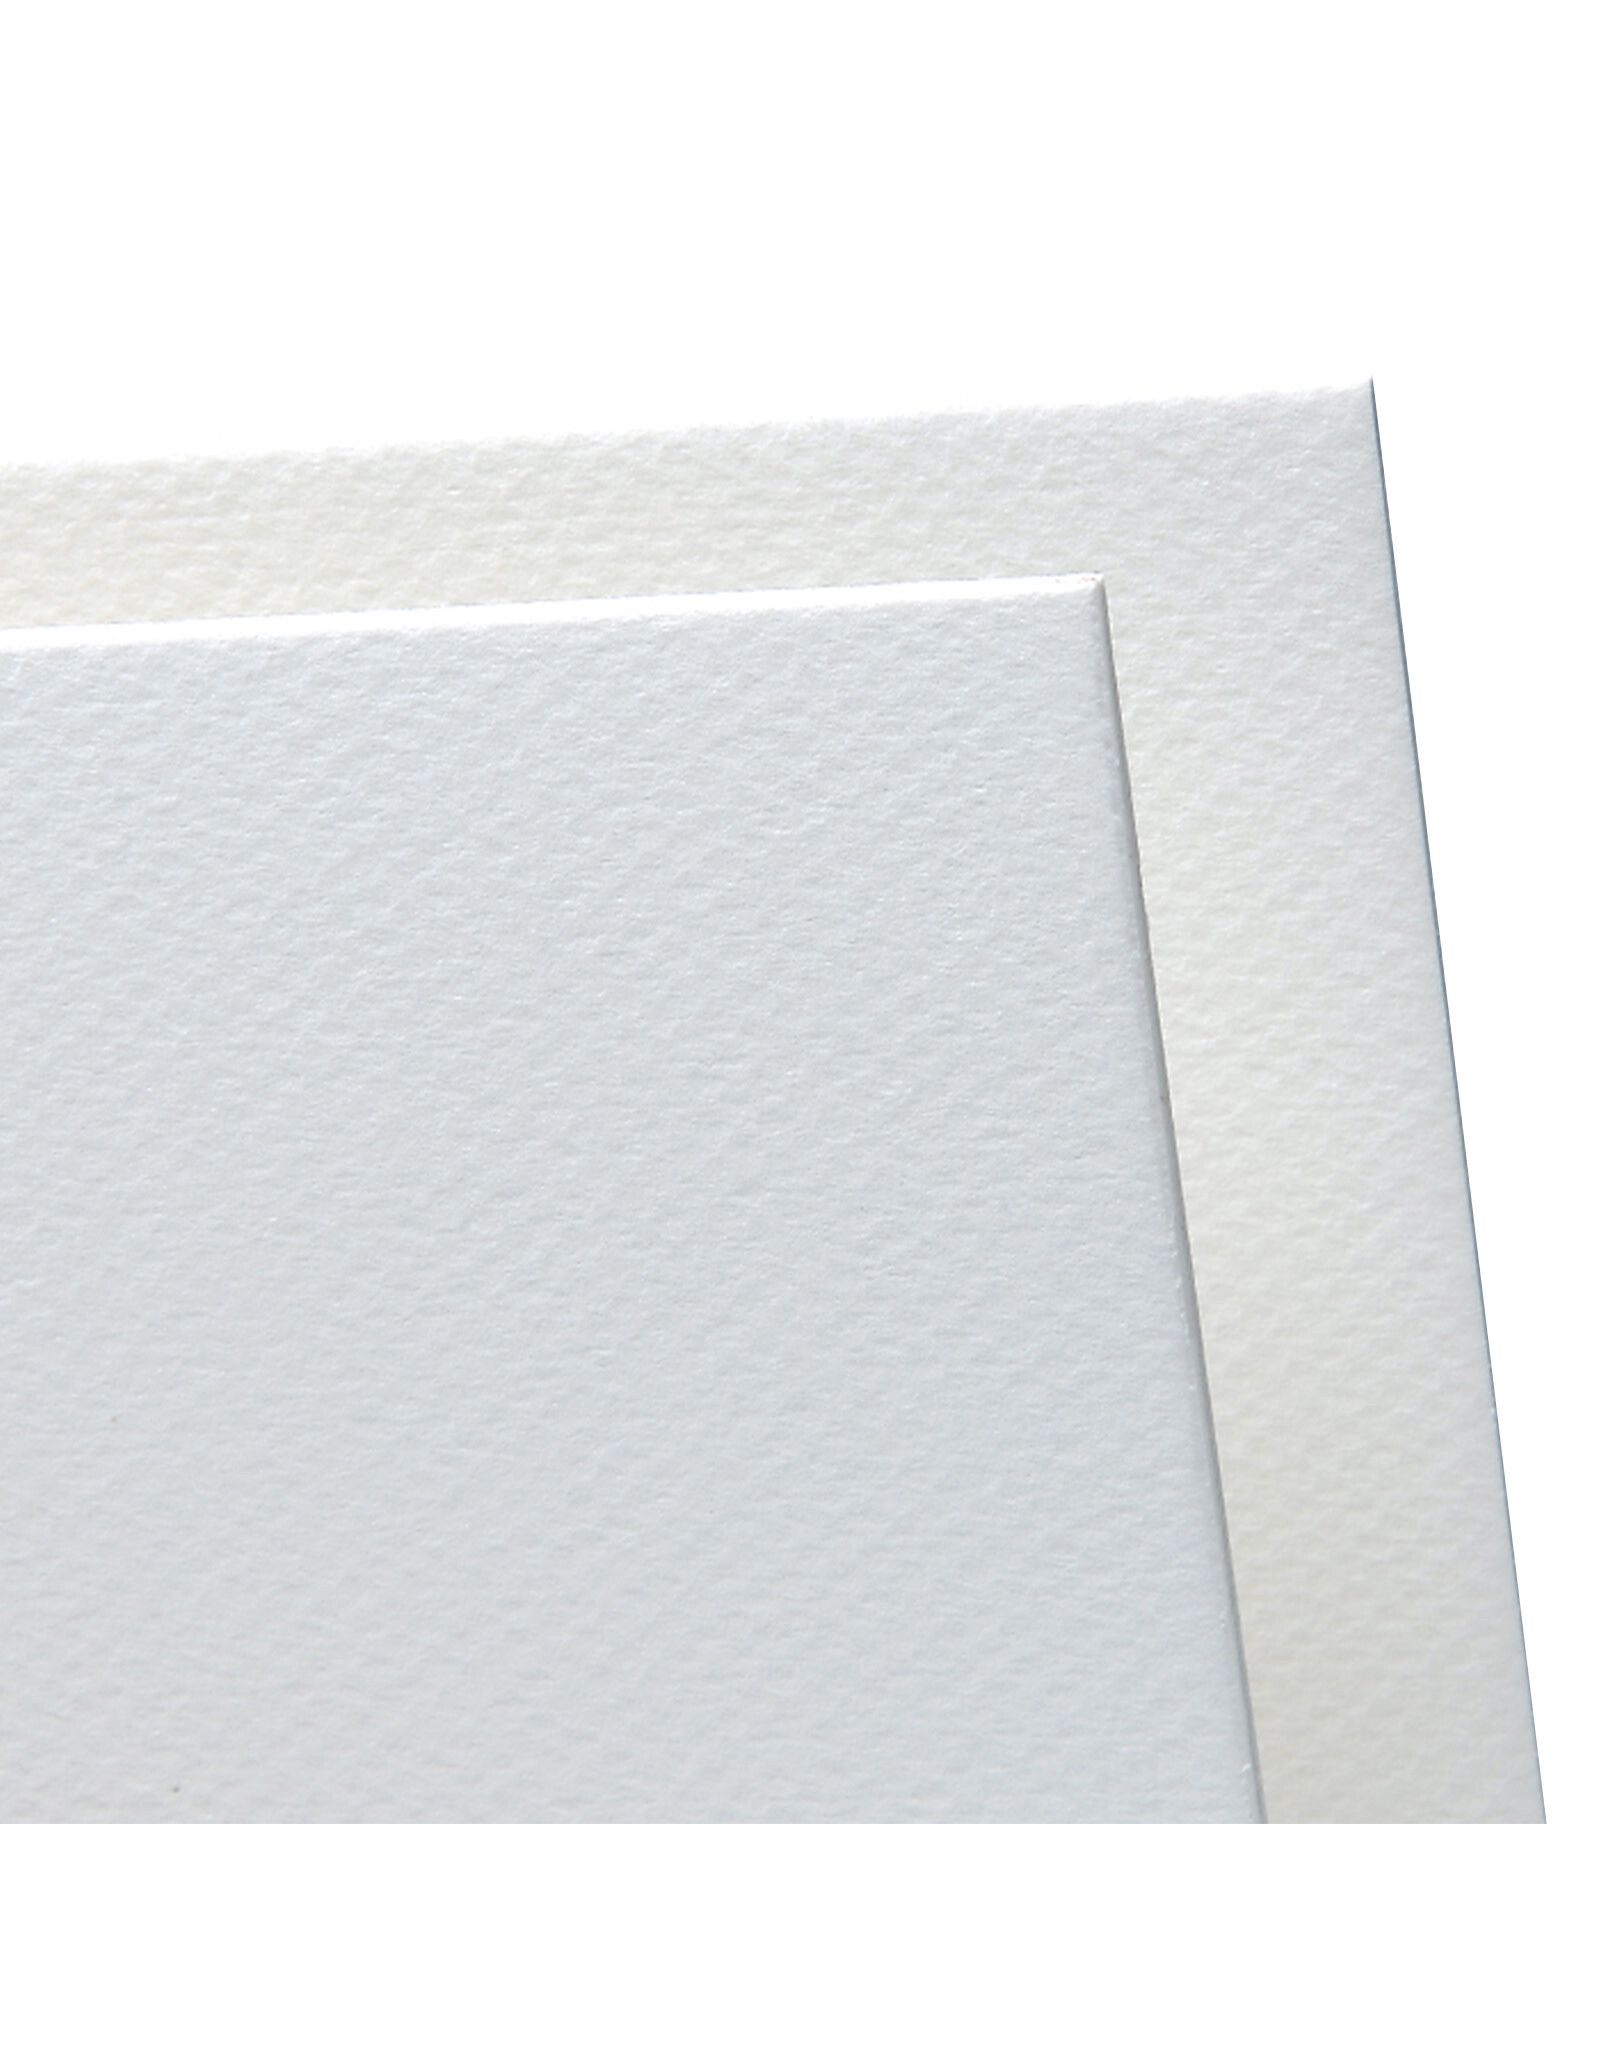 Canson Canson Mi Teintes Pastel Board, 16” x 20”, White 335